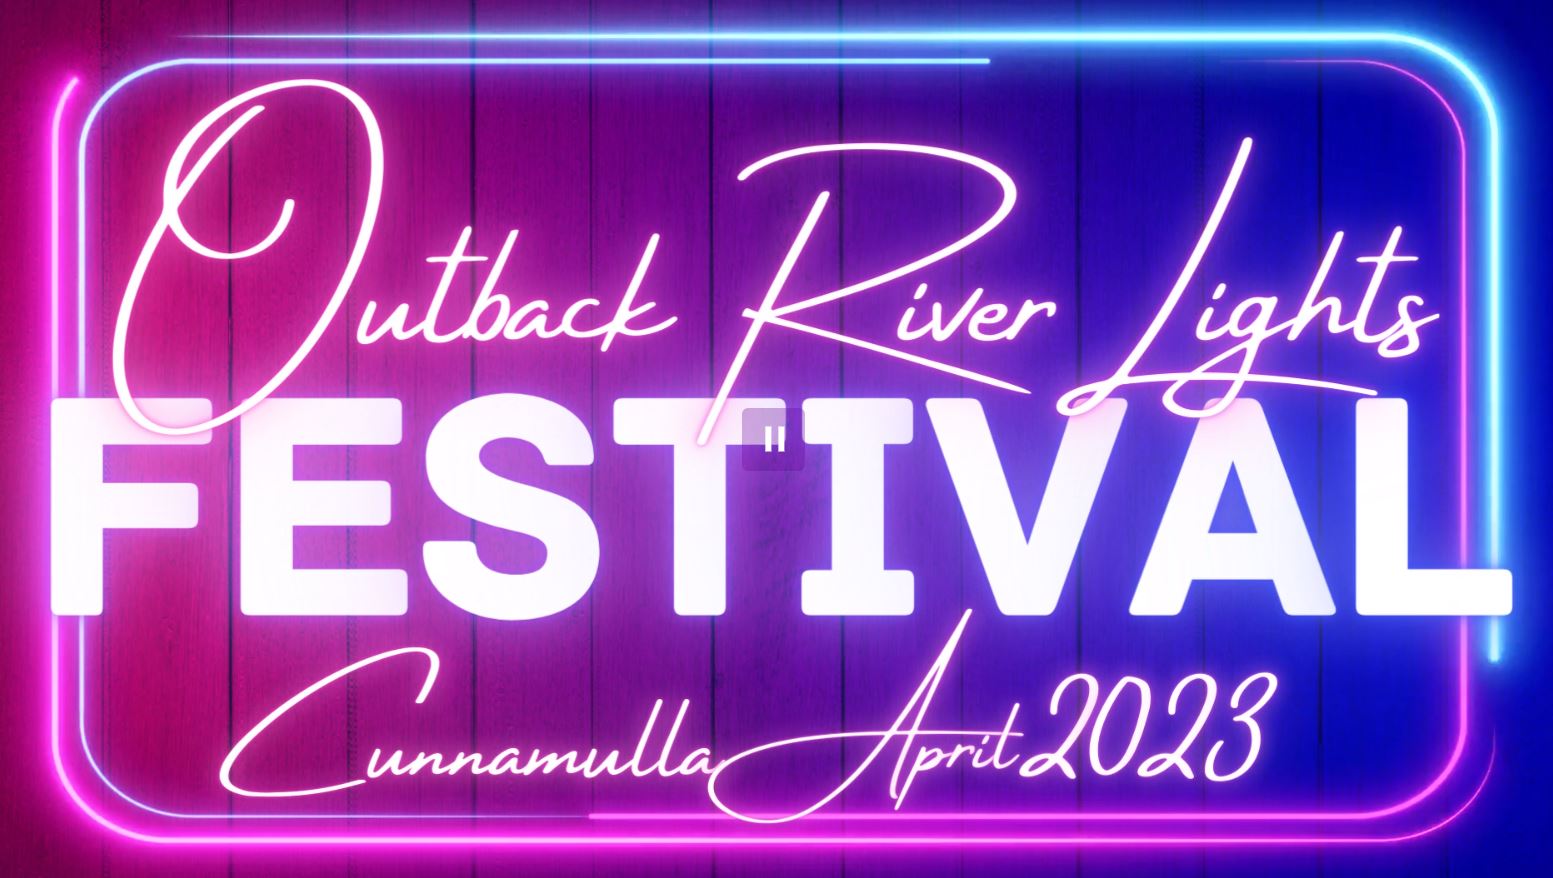 Outback River Lights Festival.